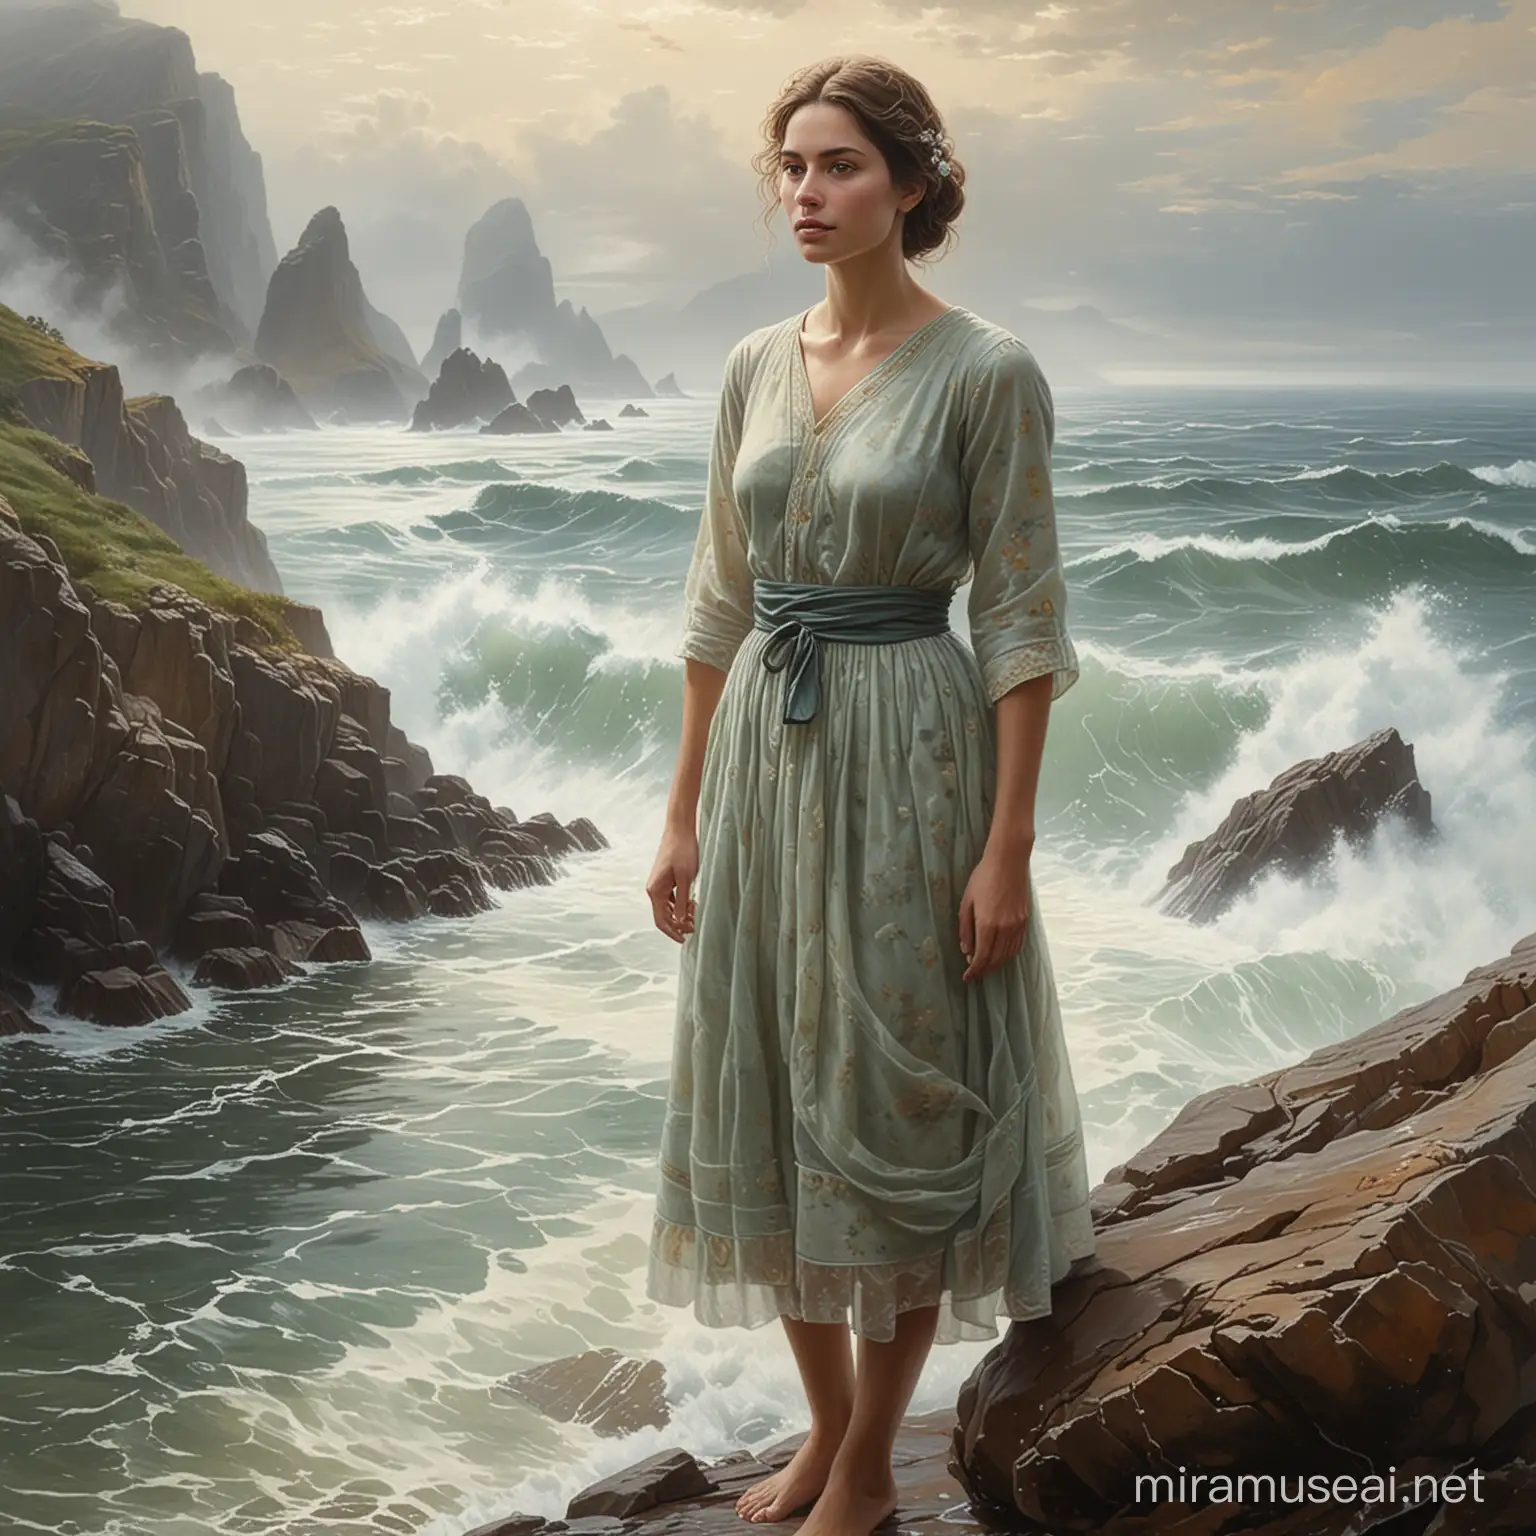 Seaside Portrait of a Lady in a Coastal Landscape with Misty Horizon